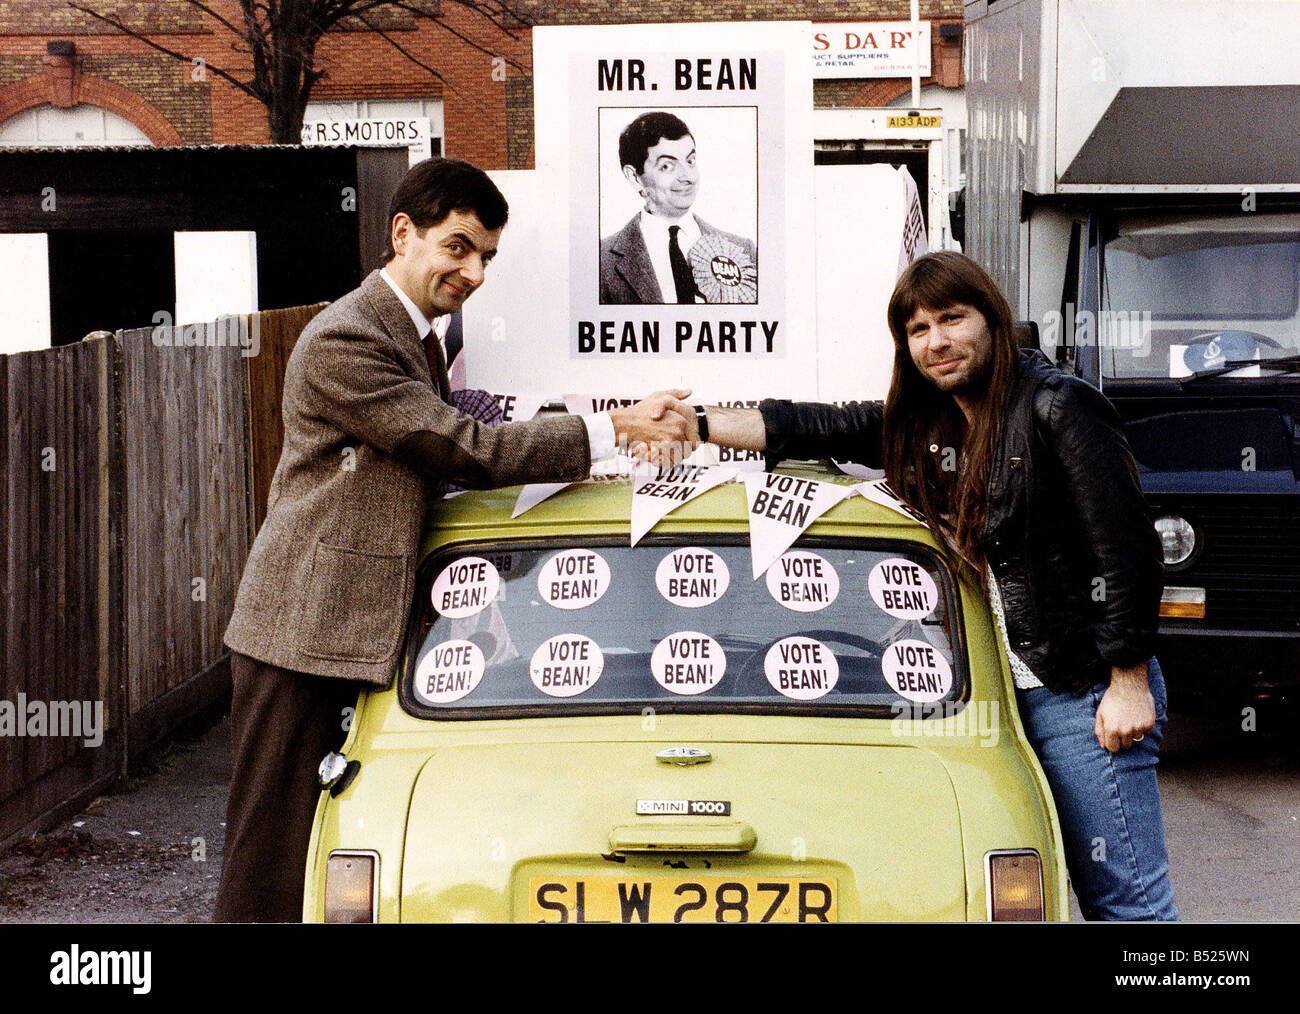 Rowan Atkinson Actor A Scene From The TV Comedy Mr Bean Stock Photo